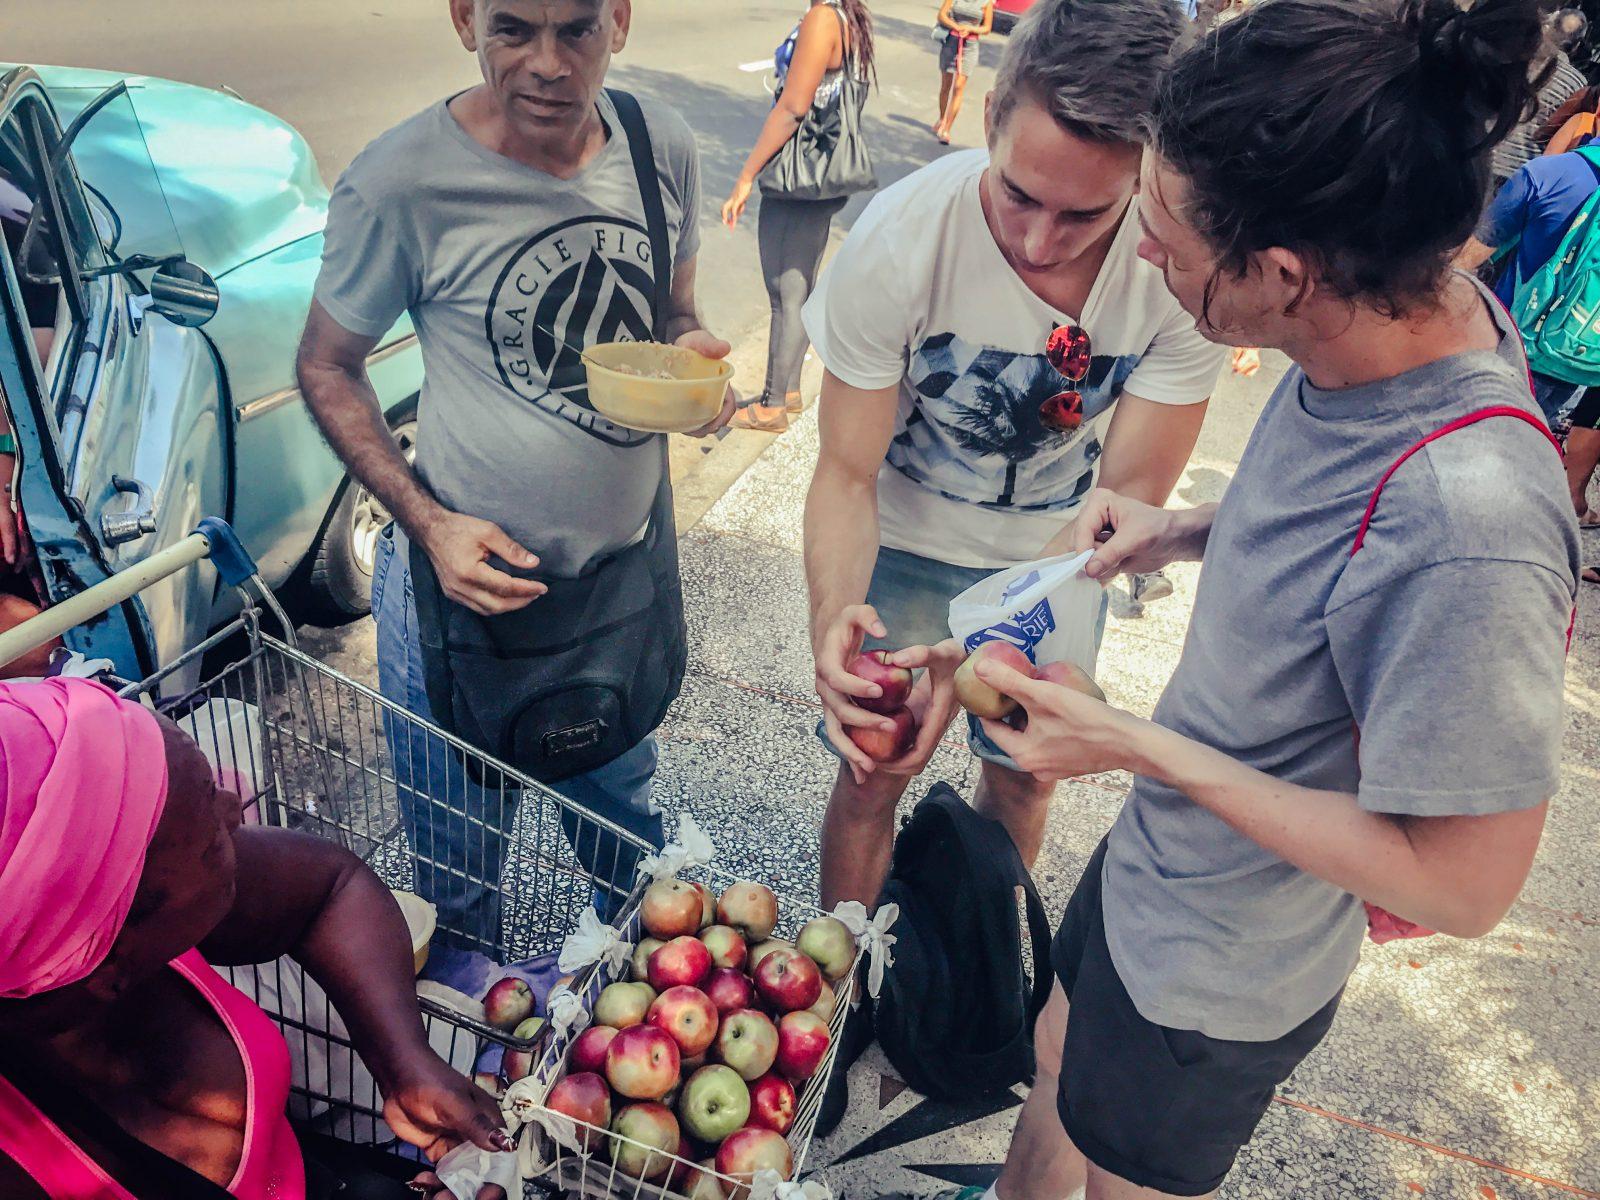 Buyings Apples in Cuba